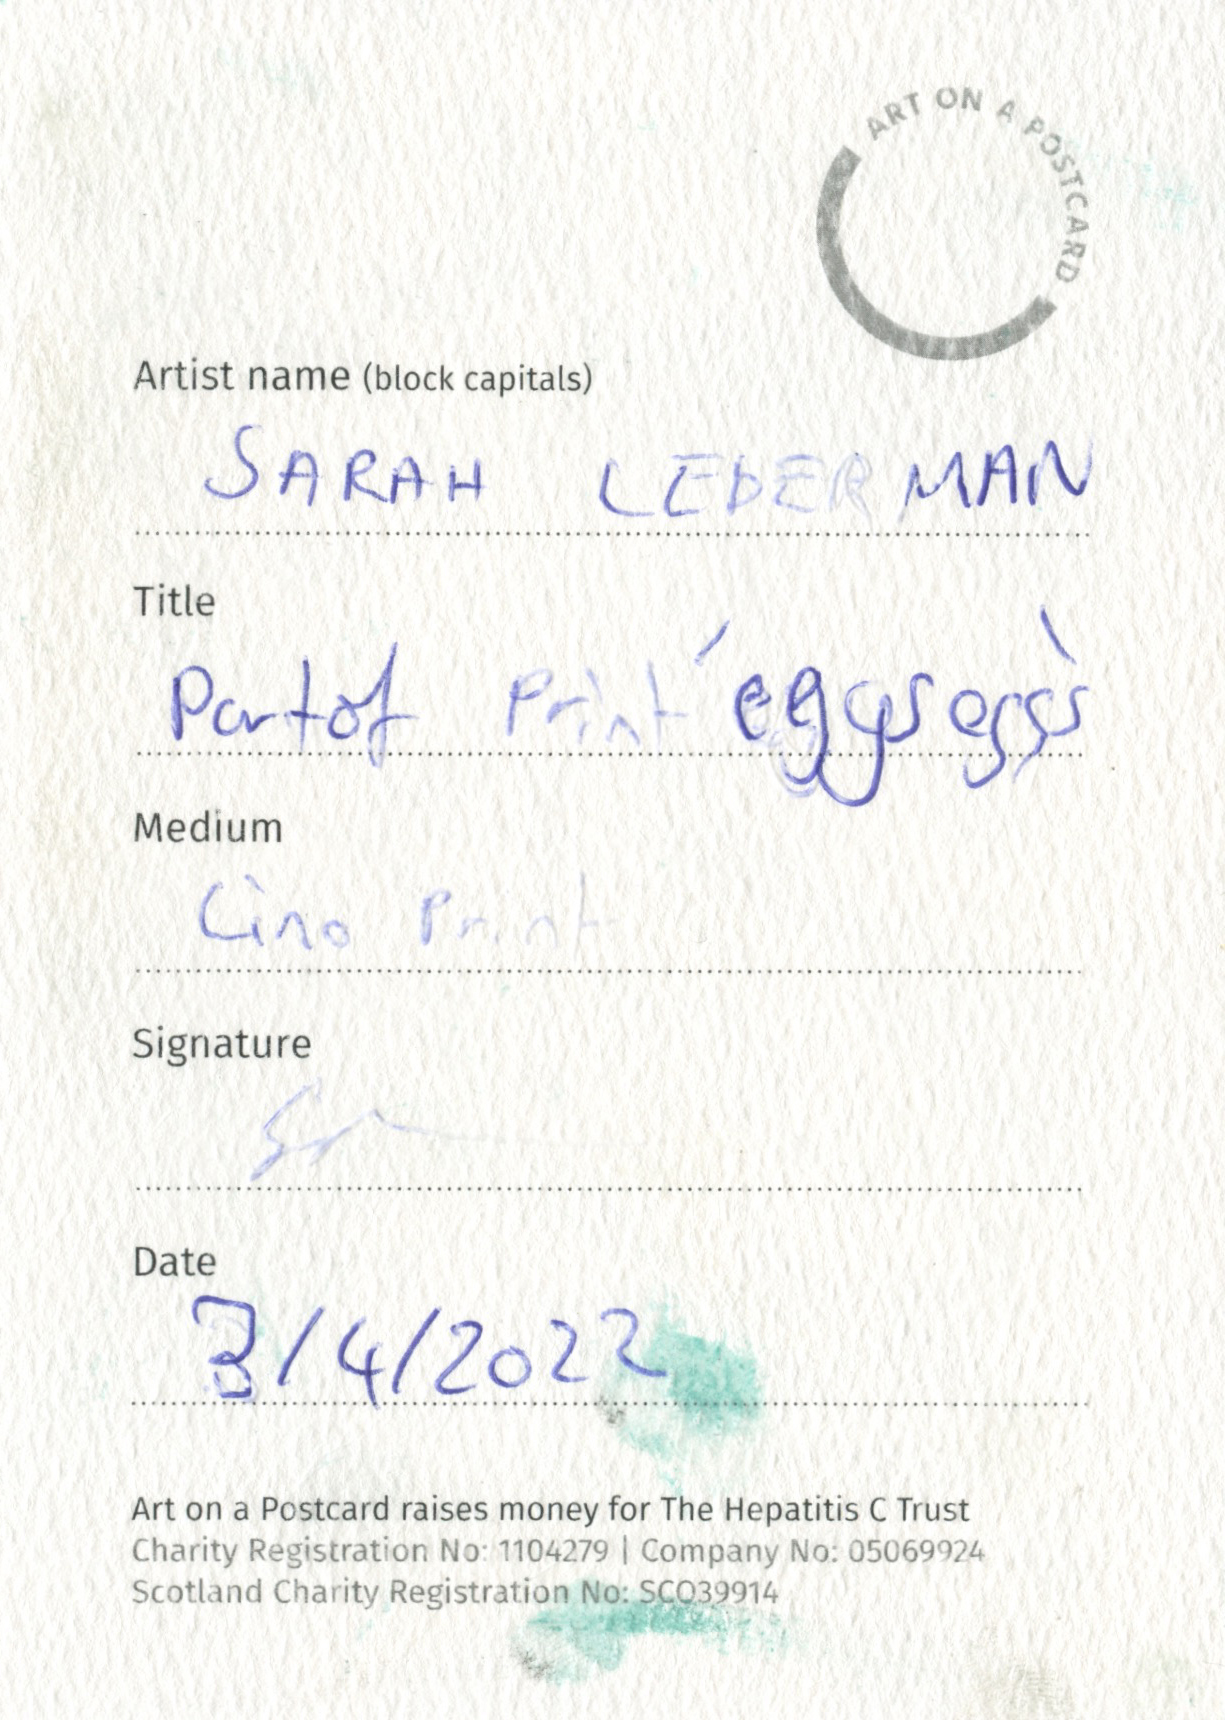 18. Sarah Lederman - Part of Print 'eggs eggs' (3) - BACK